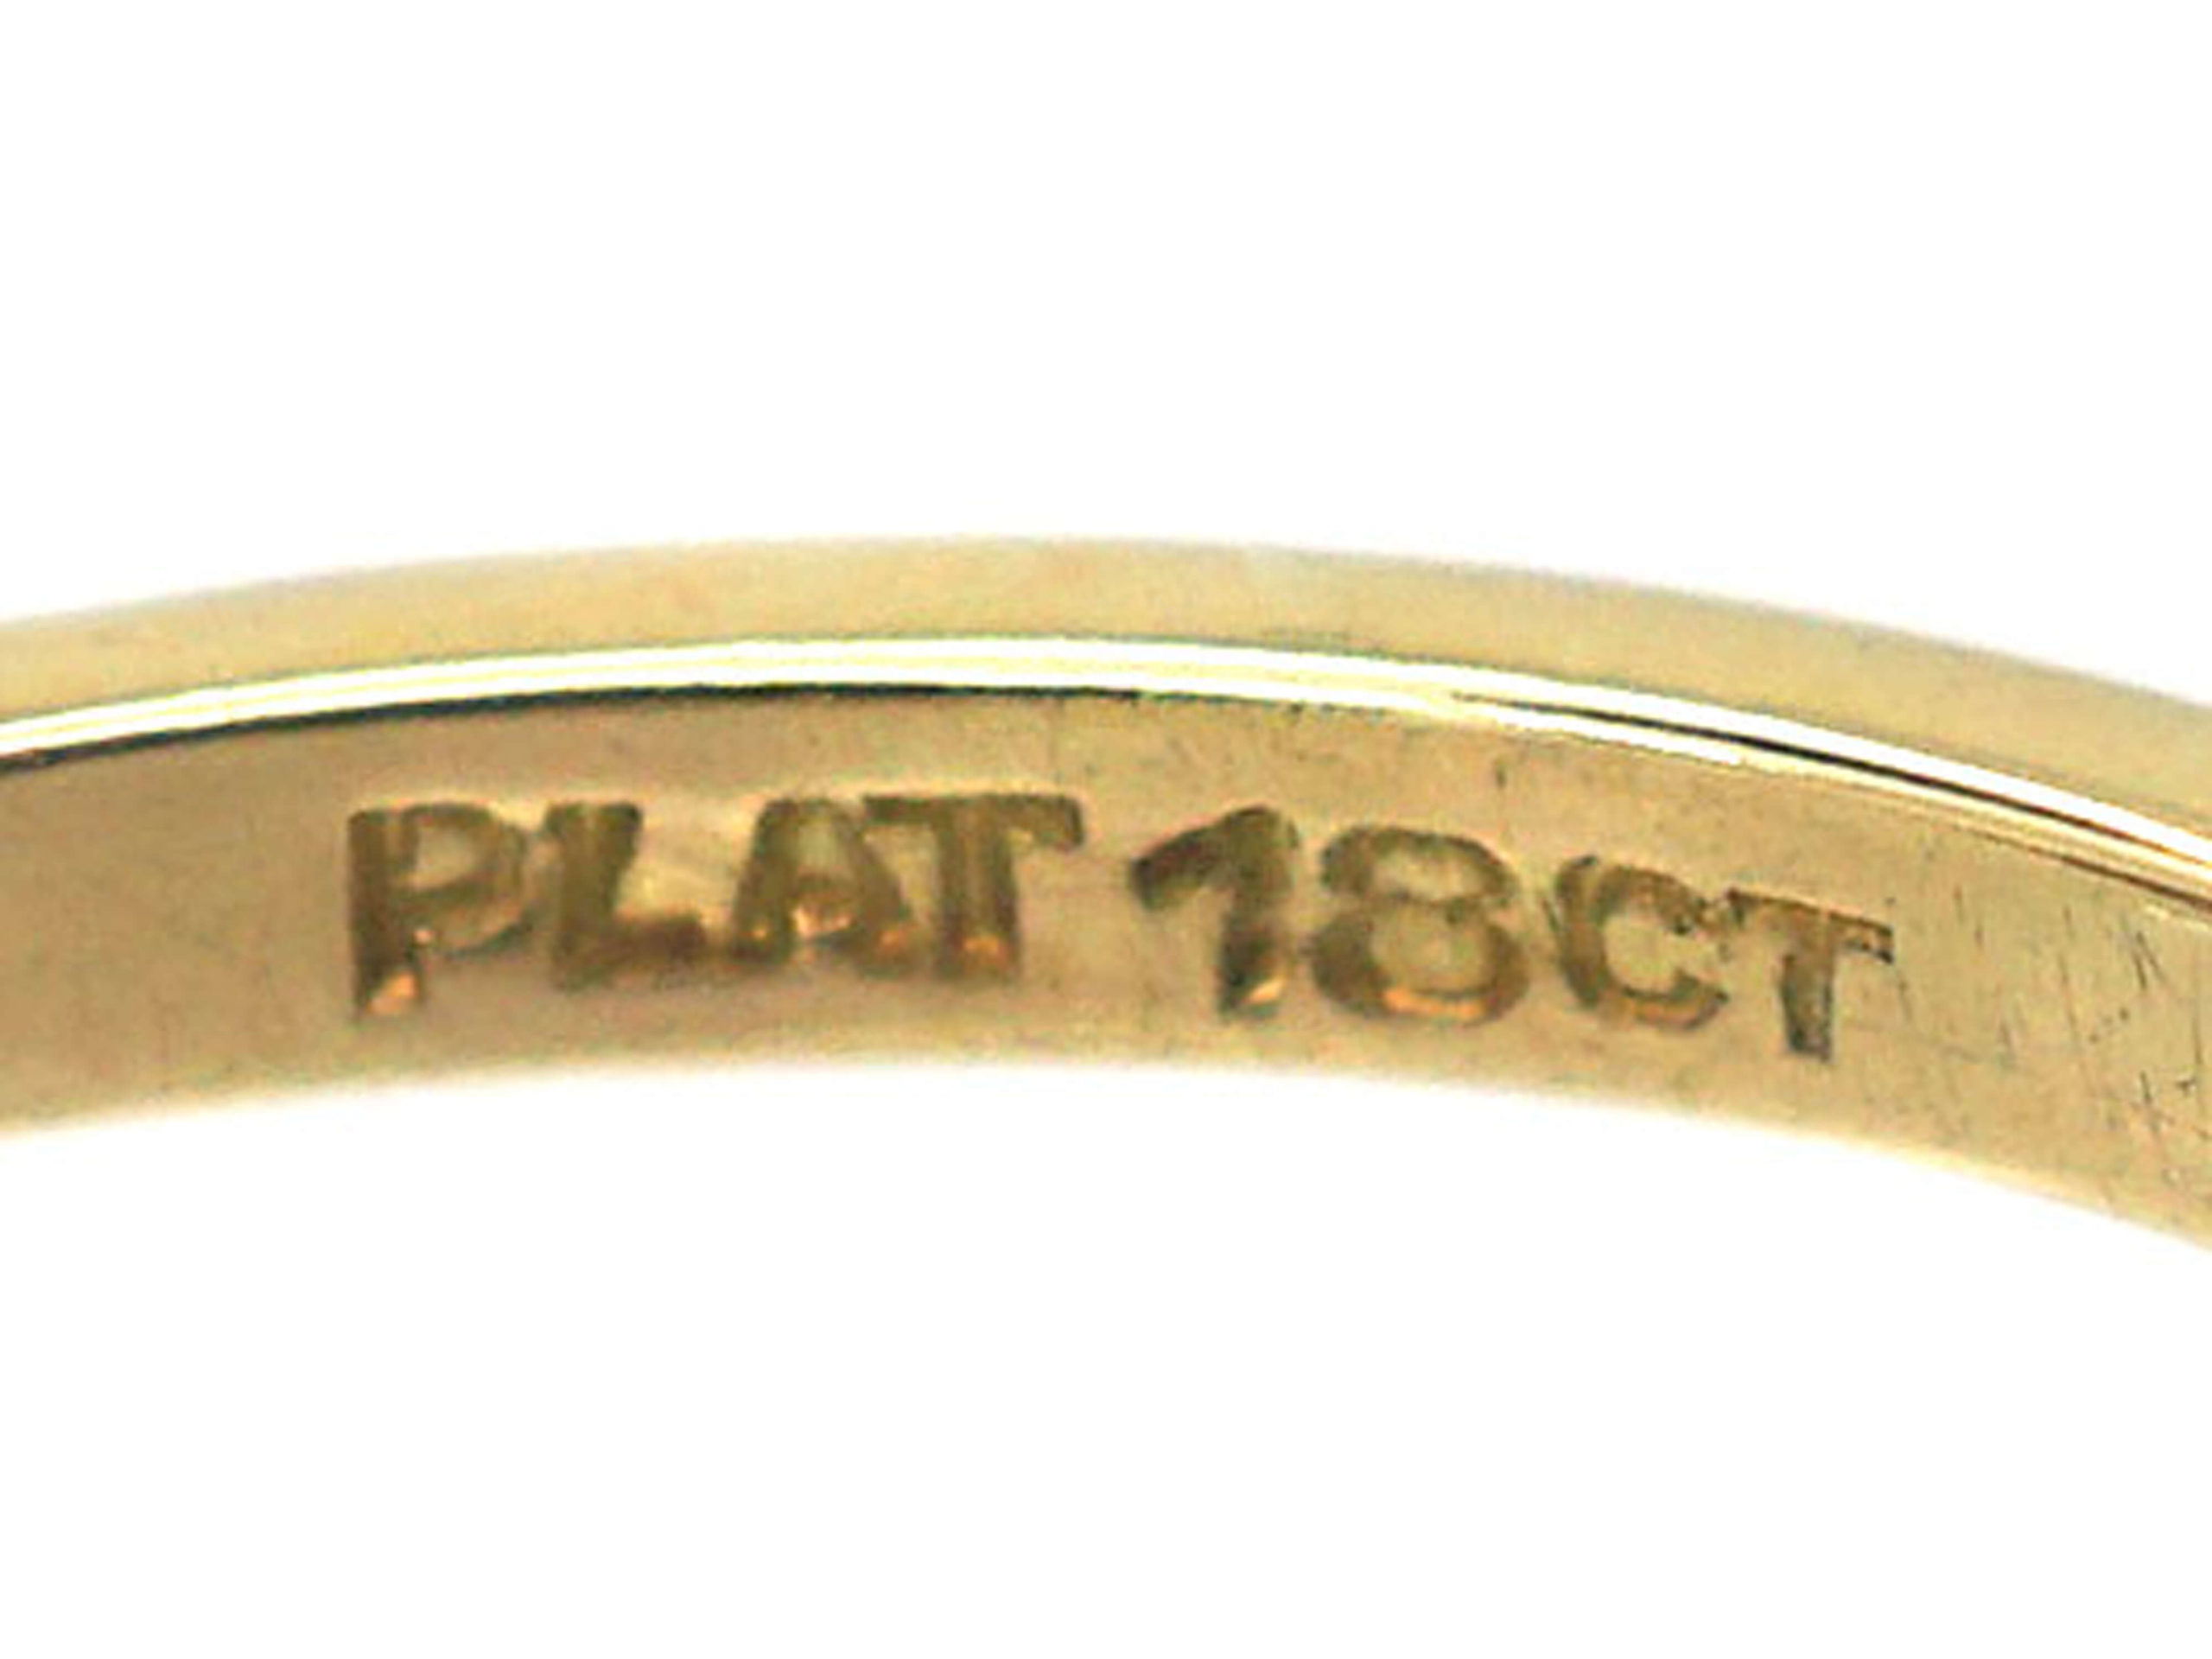 Co znamená 18CT Plat na prstenu?